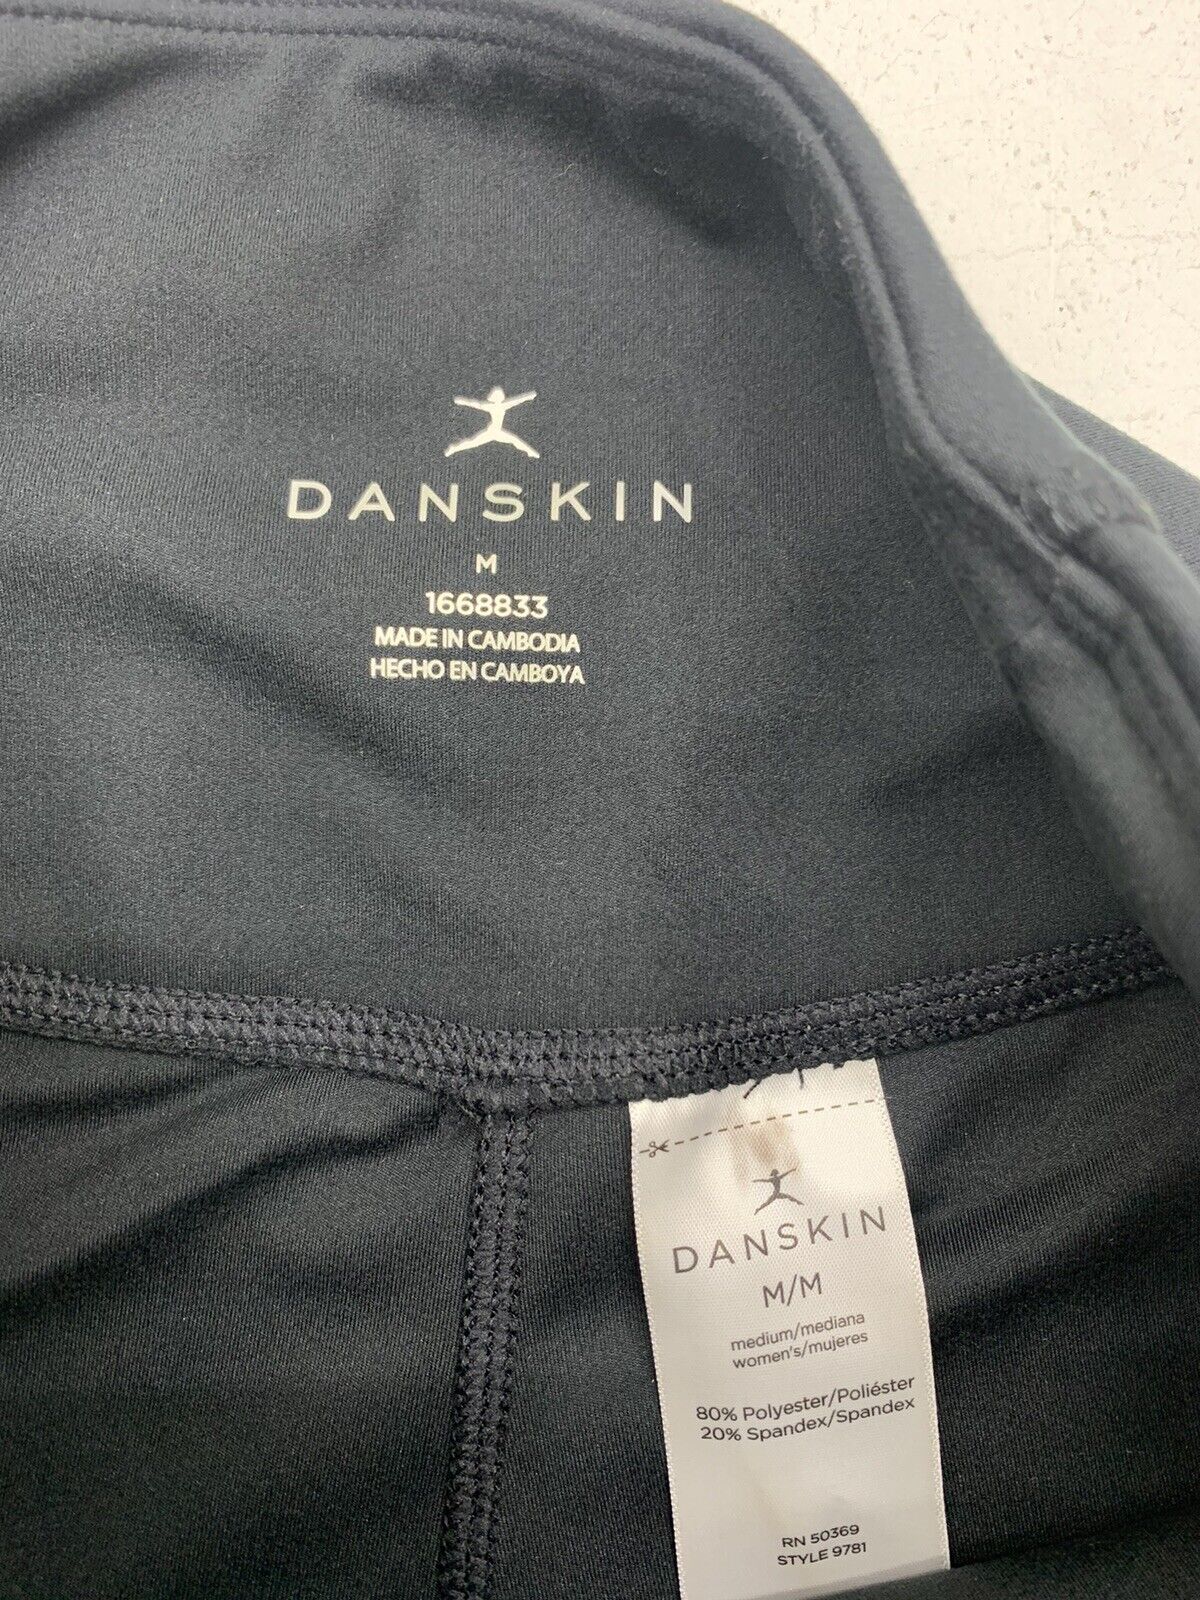 Danskin Womens Black Athletic Shorts Size Medium - beyond exchange